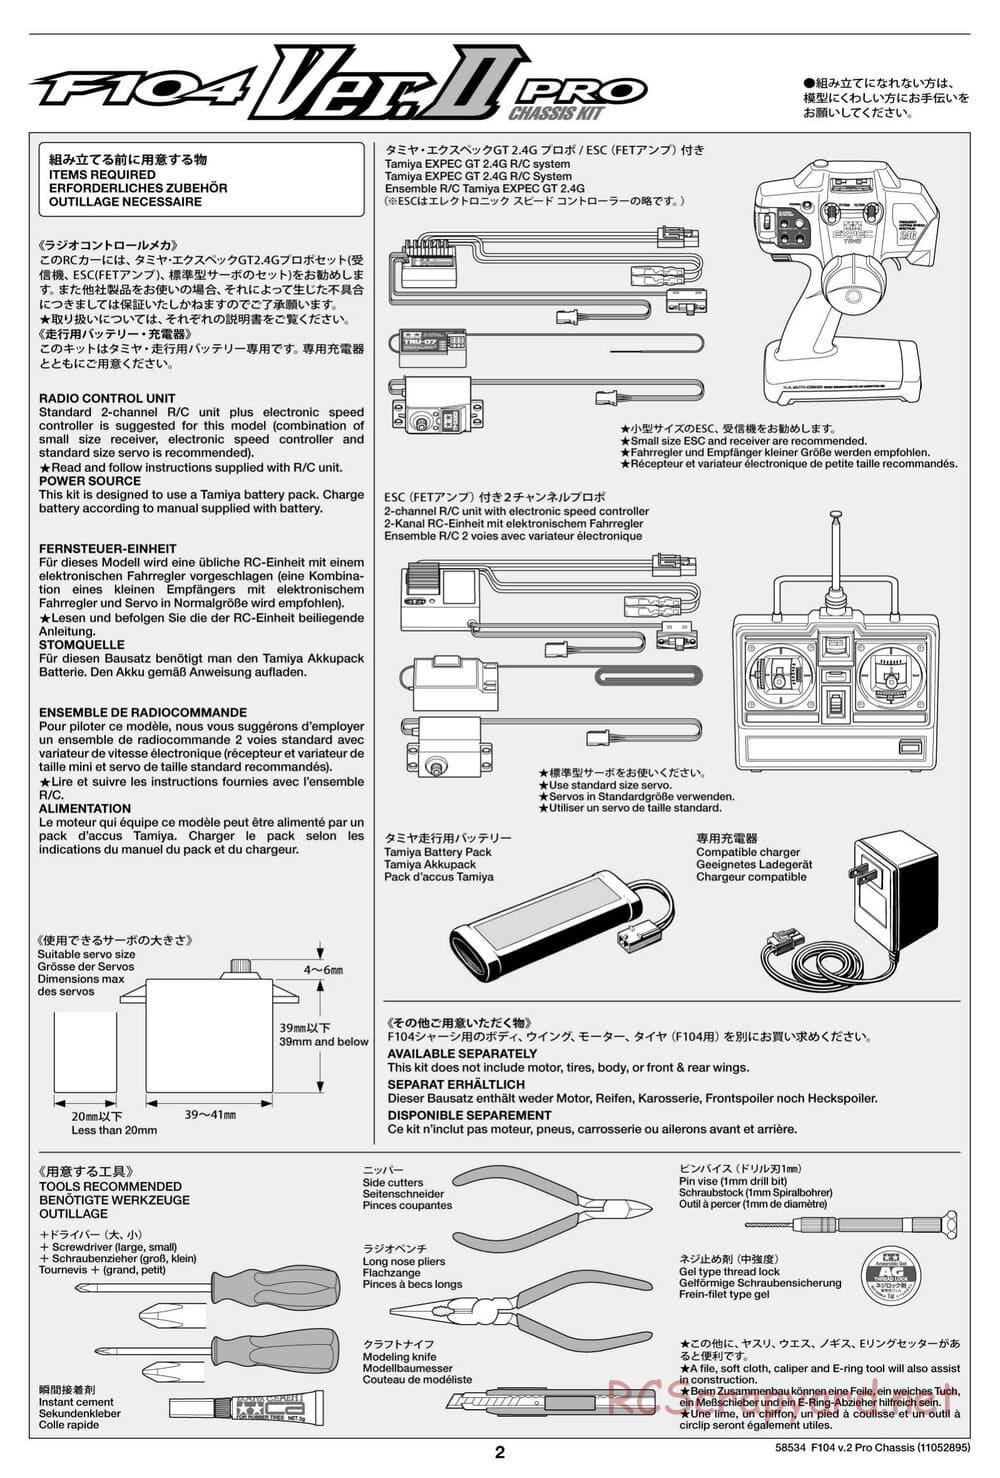 Tamiya - F104 Ver.II PRO Chassis - Manual - Page 2